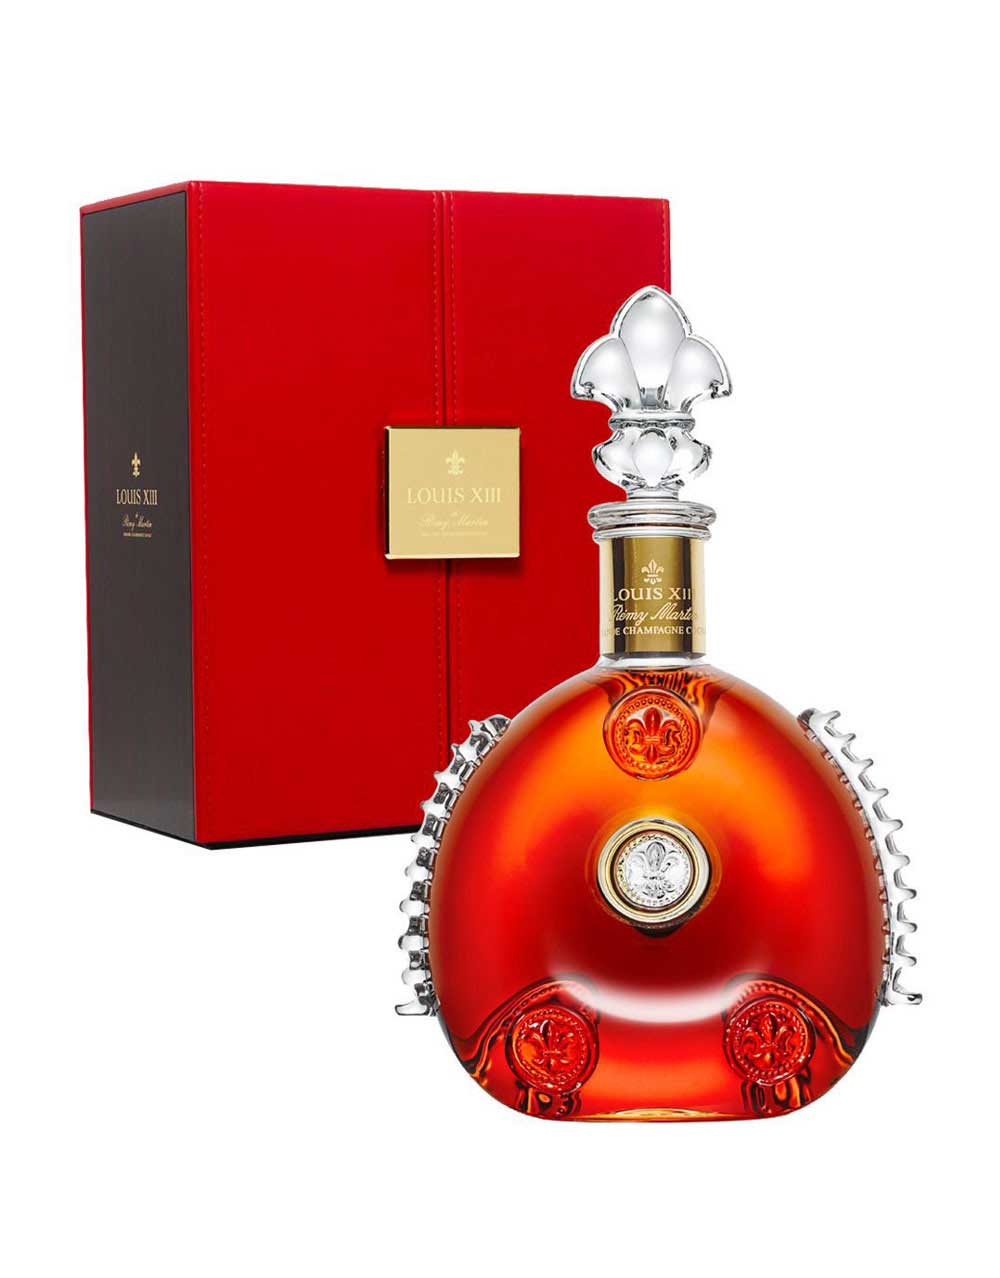 Hennessy X.O Cognac